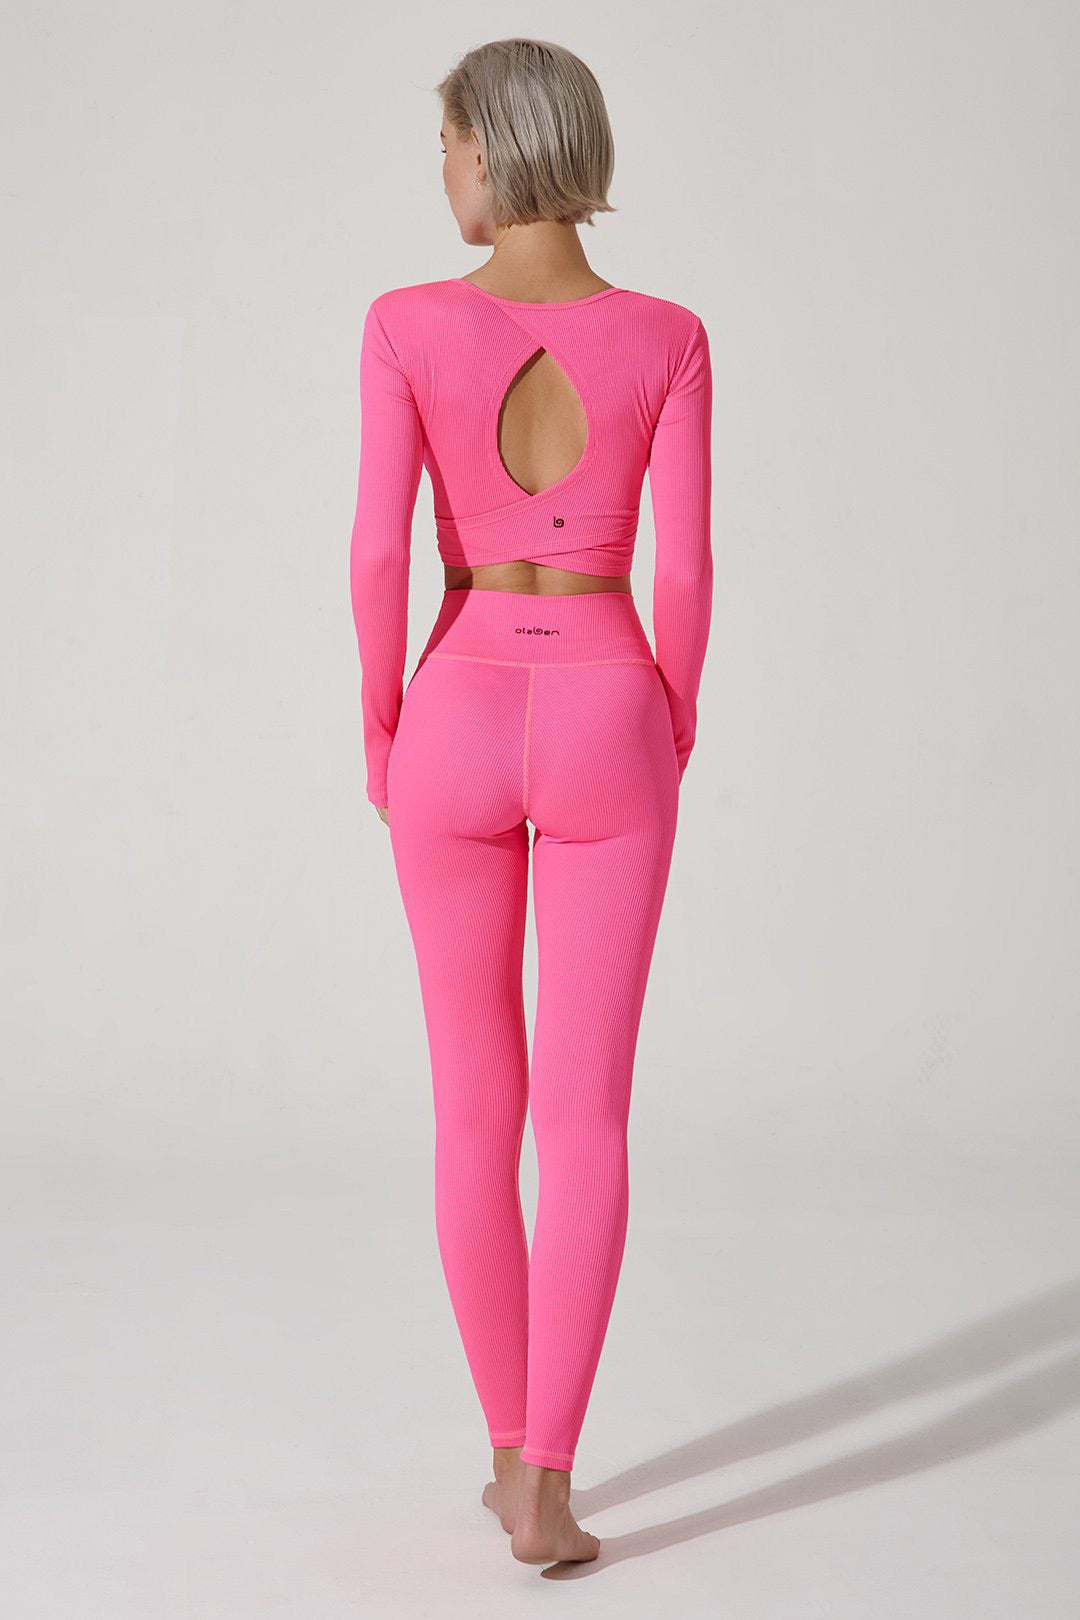 Hot pink long sleeve women's bra with a stylish design - OW-0059-WBR-PK_1.jpg